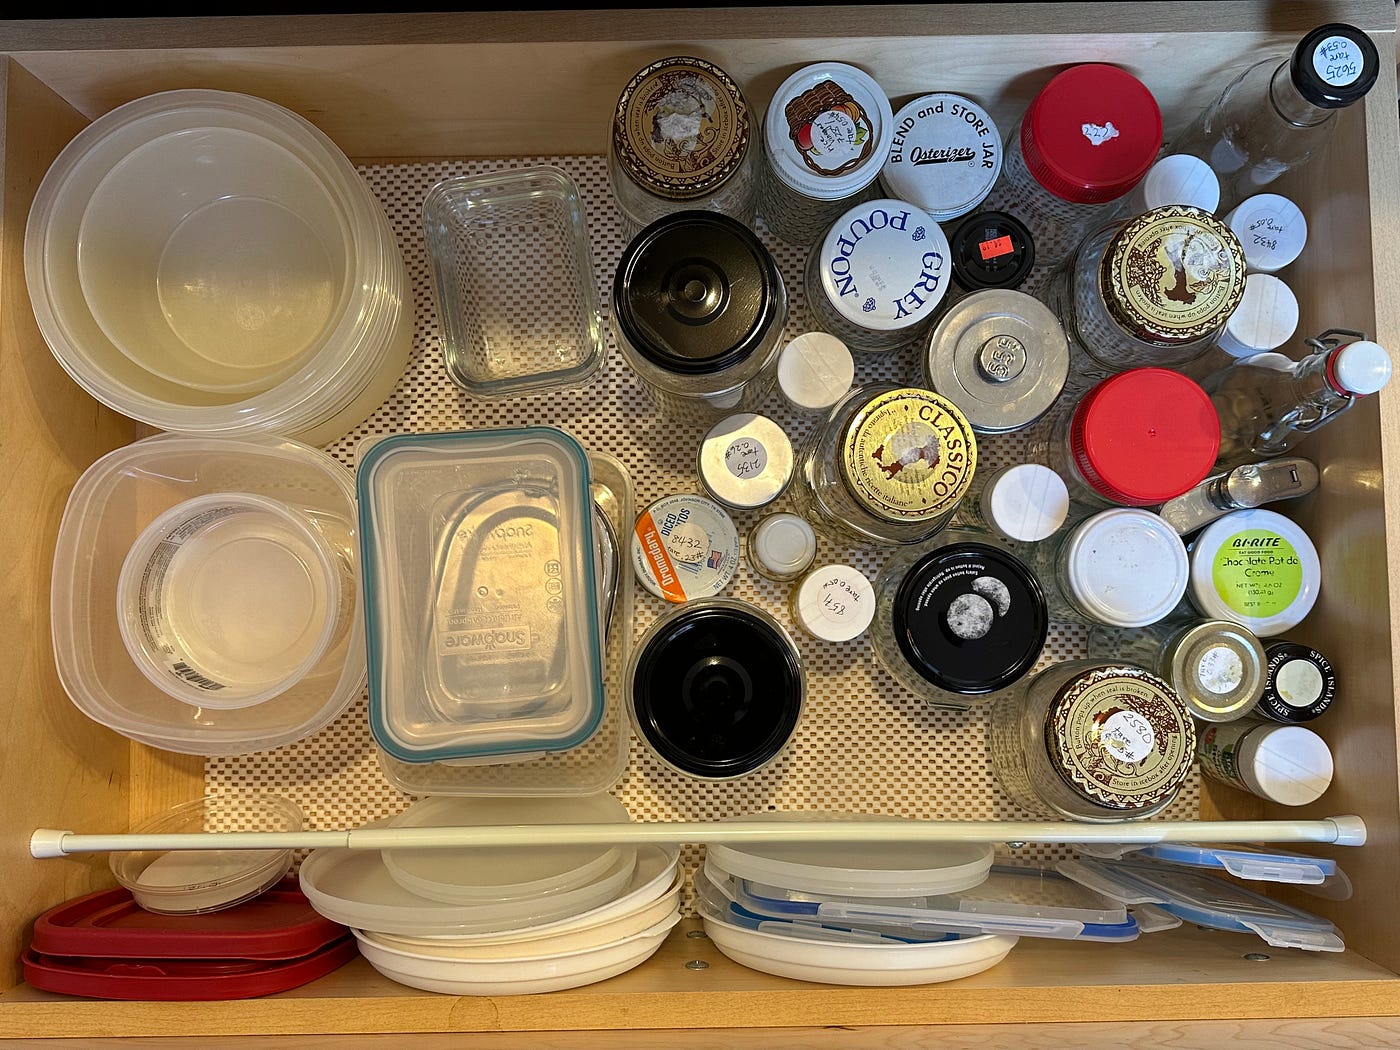 A Genius Kitchen Storage Idea to Organize Your Plastic Wrap and Tinfoil